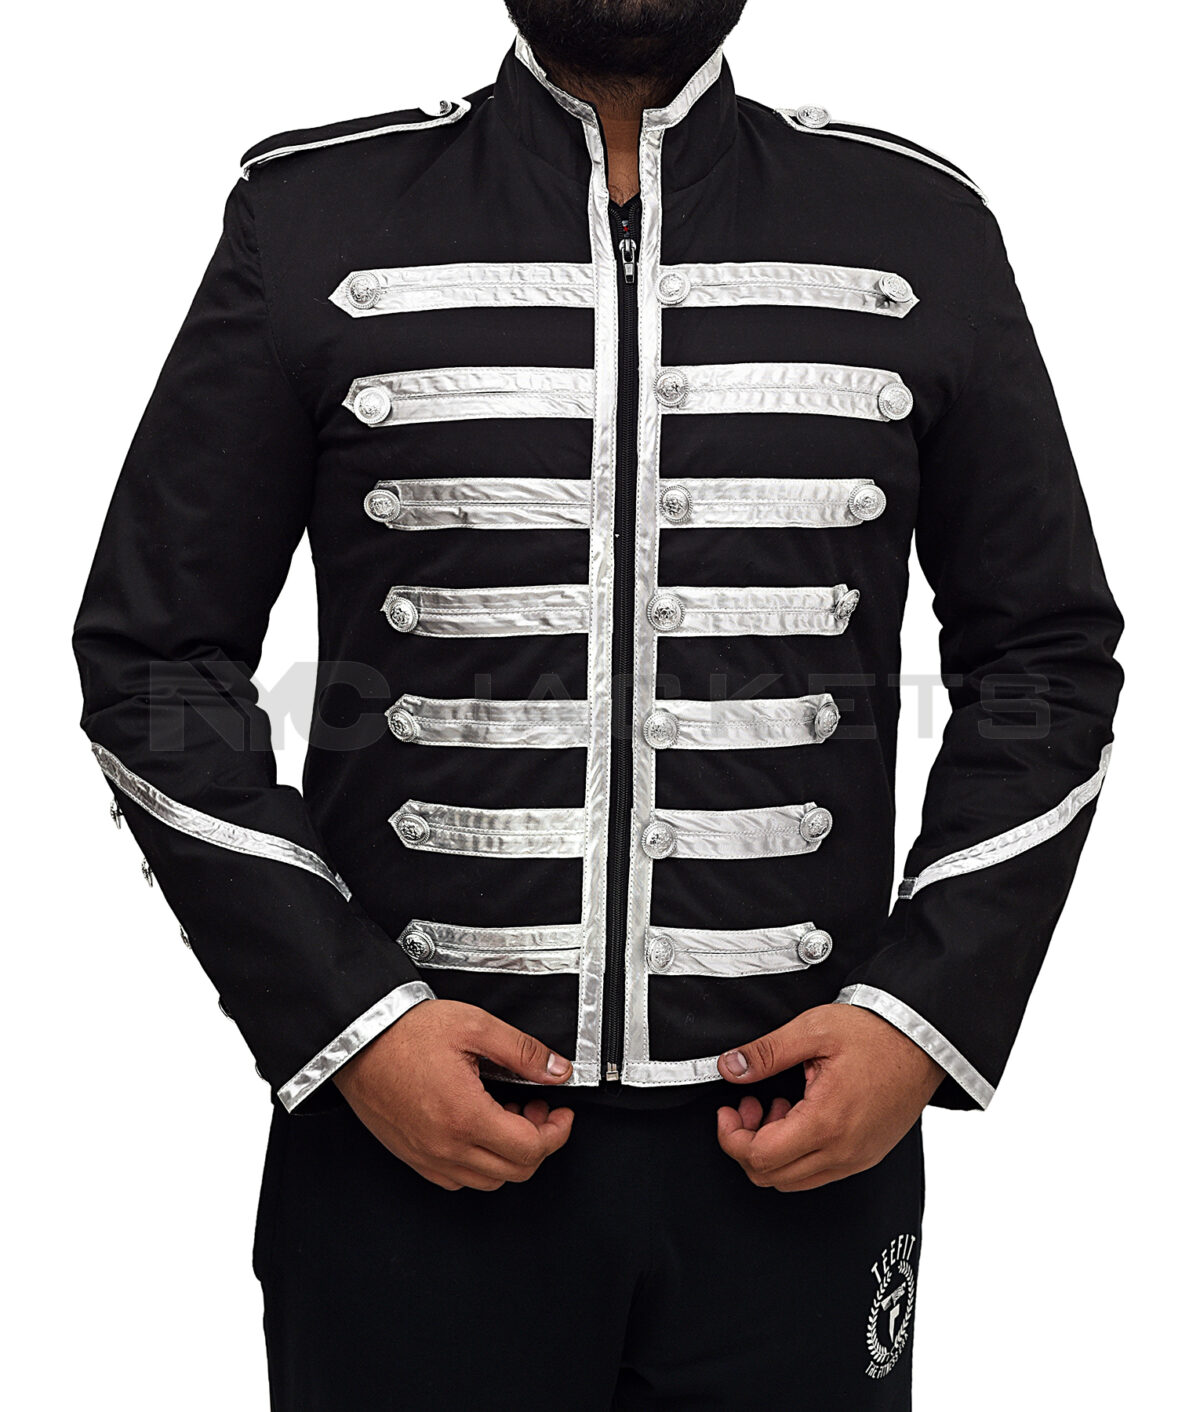 Black Parade My Chemical Romance Jacket